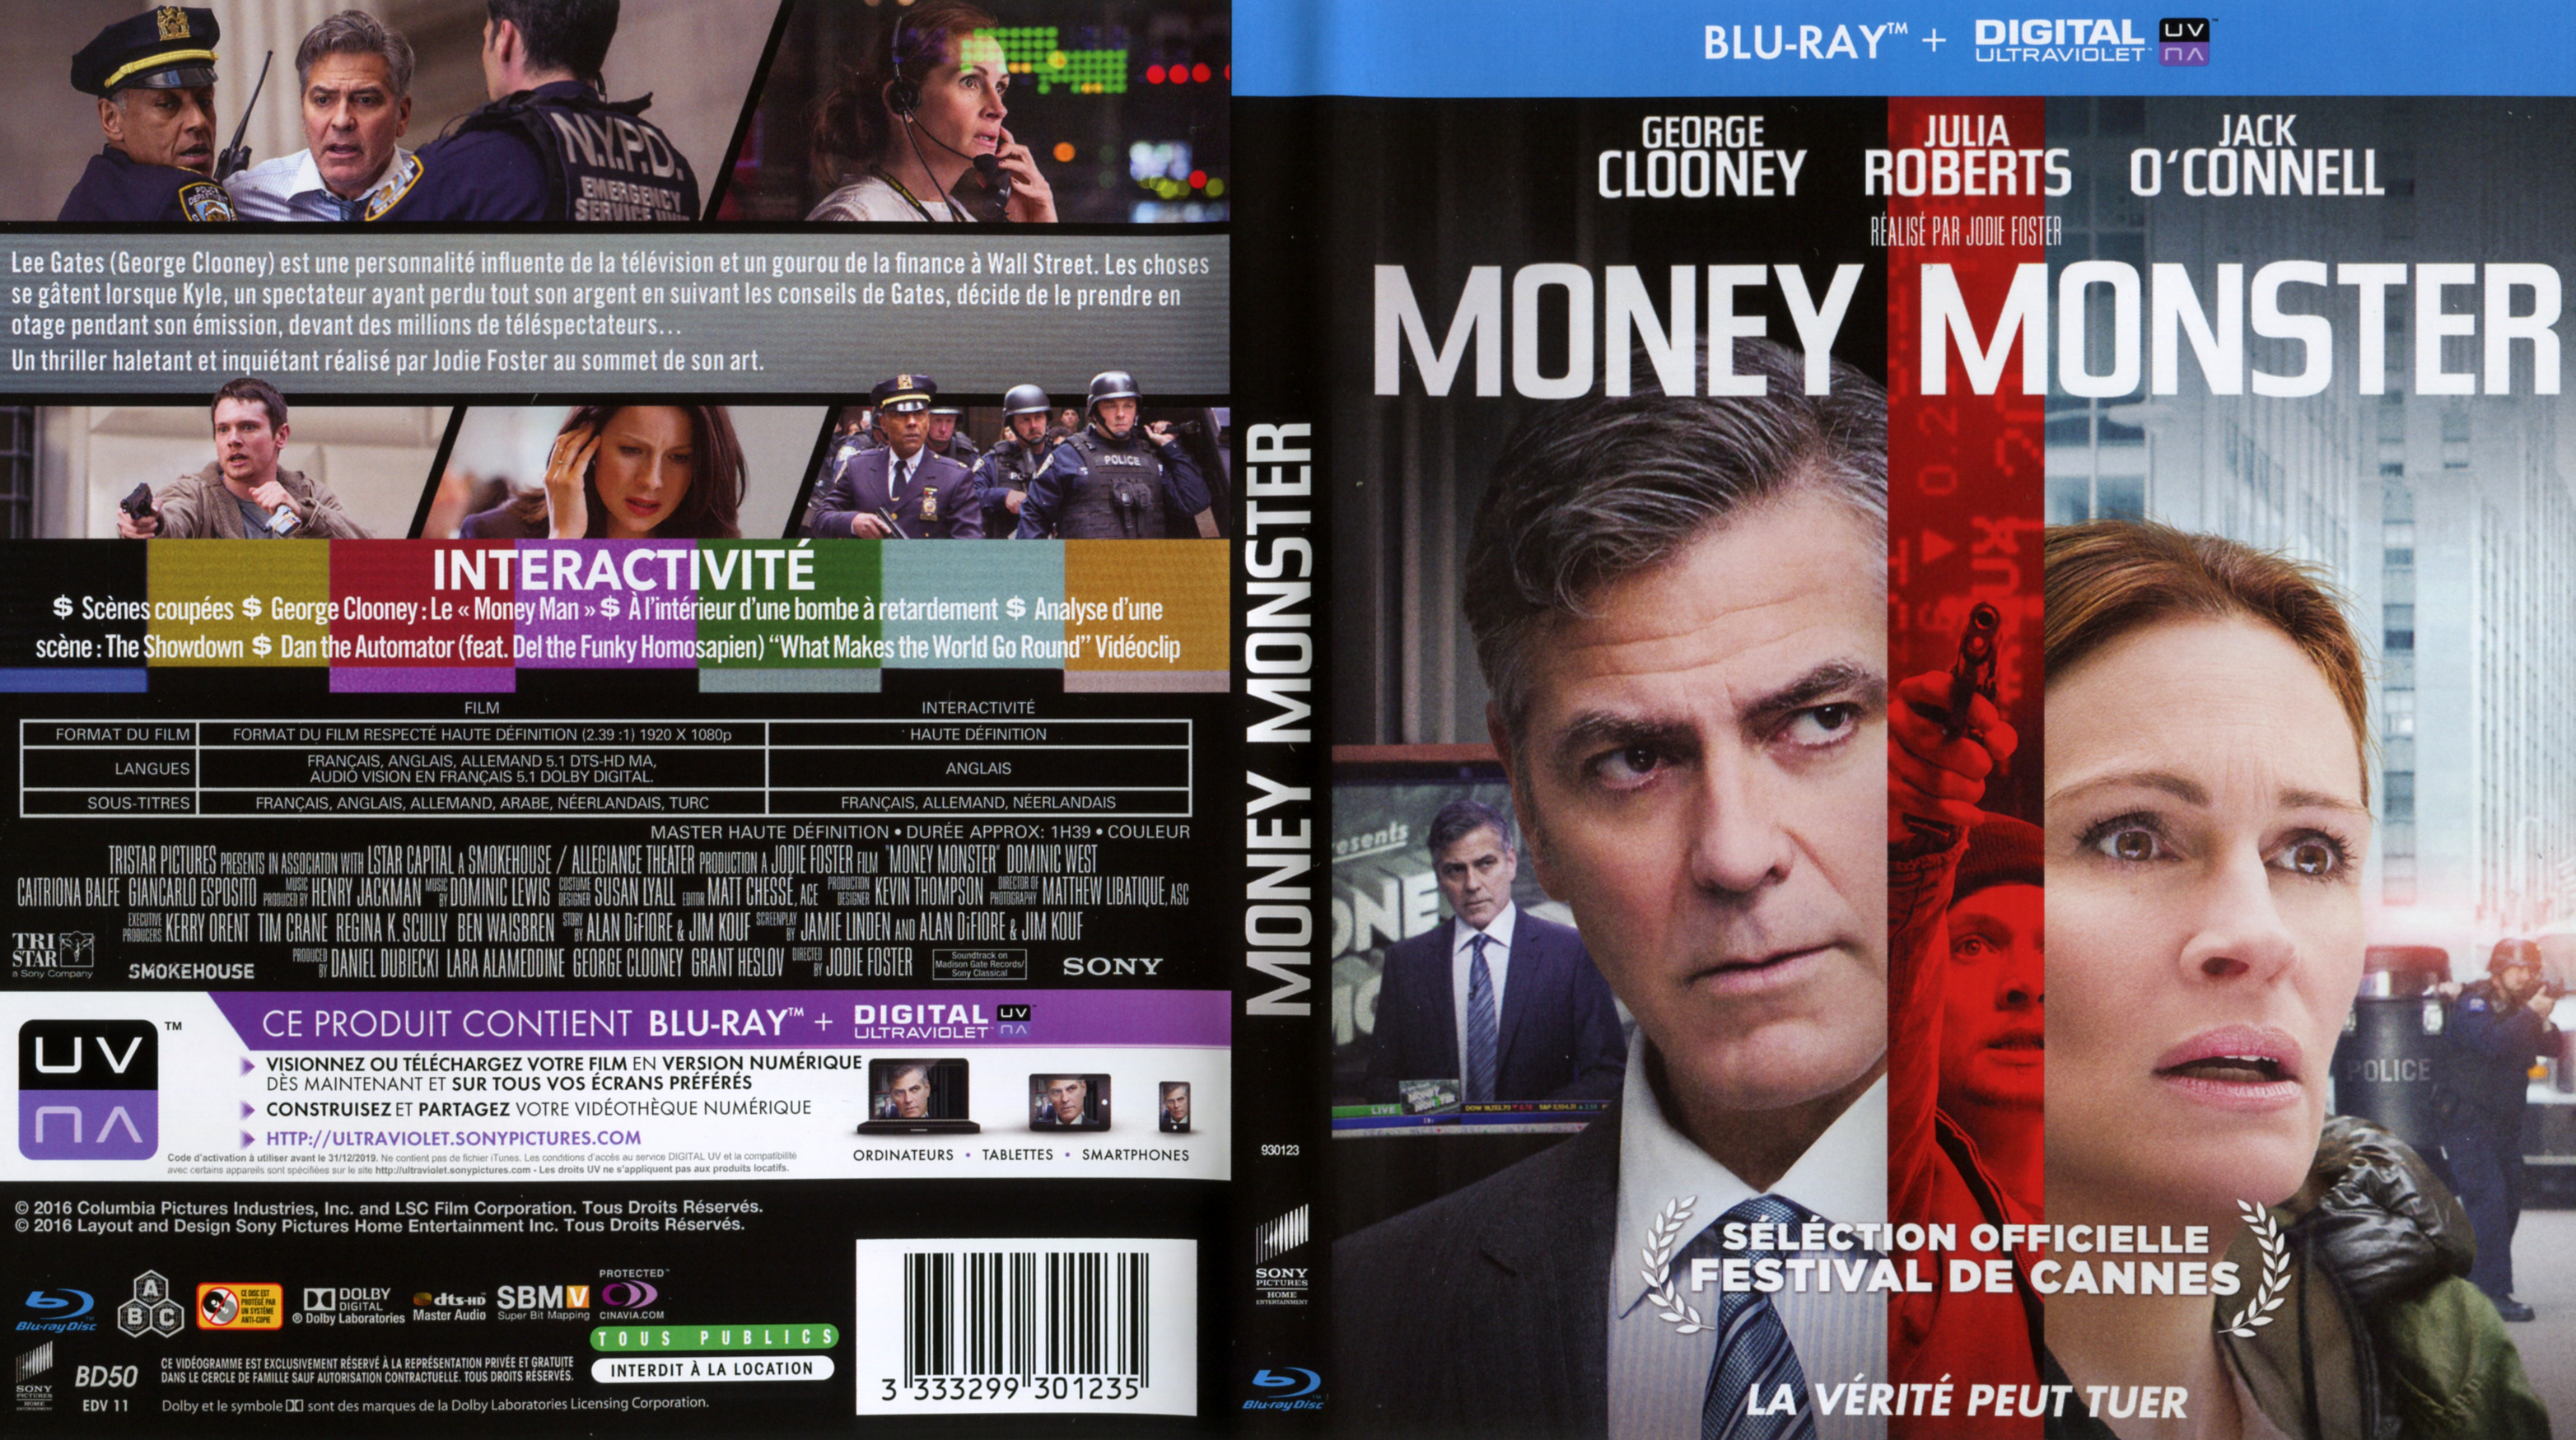 Jaquette DVD Money Monster (BLU-RAY)